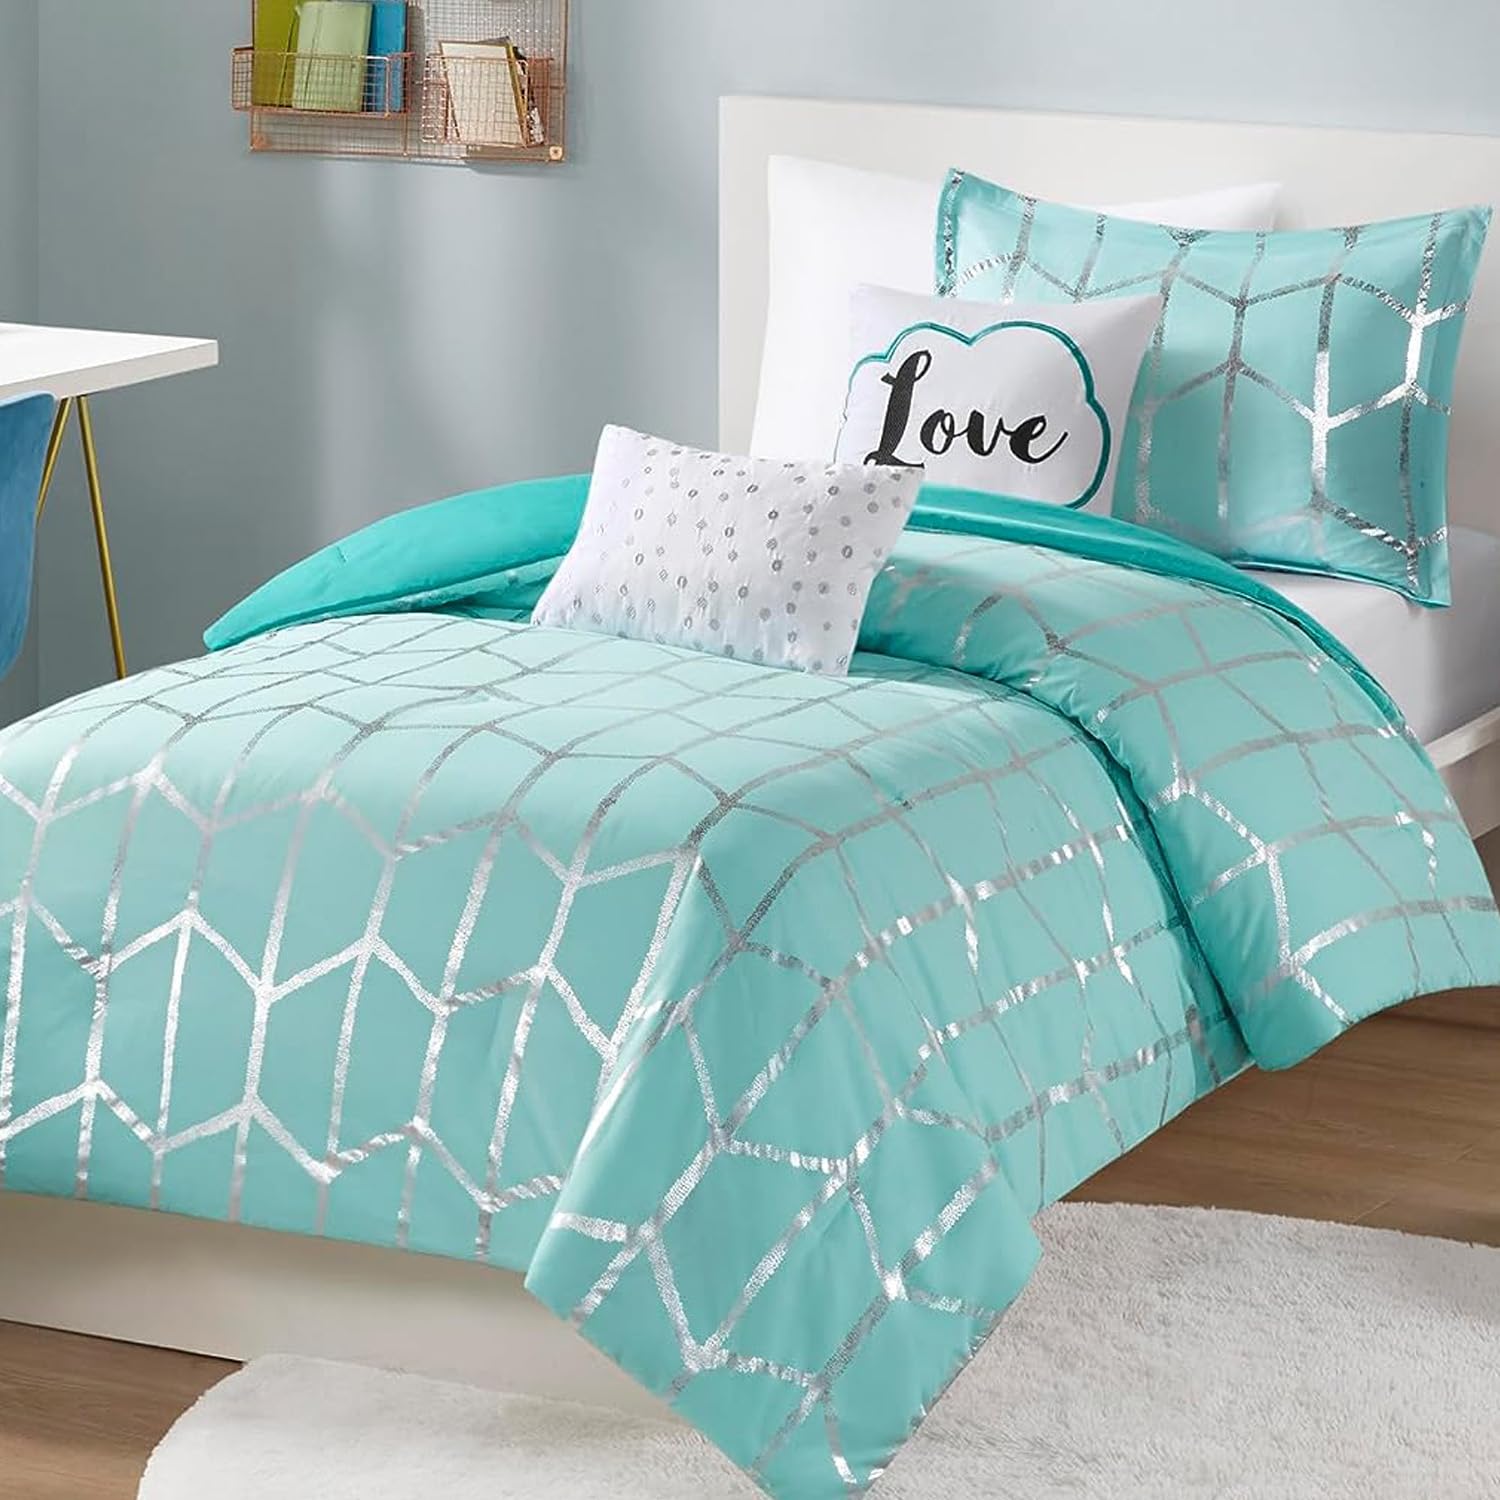 Intelligent Design Raina Comforter Metallic Print Geometric Design Modern Trendy All Season Bedding Set, Matching Sham, Decorative Pillow